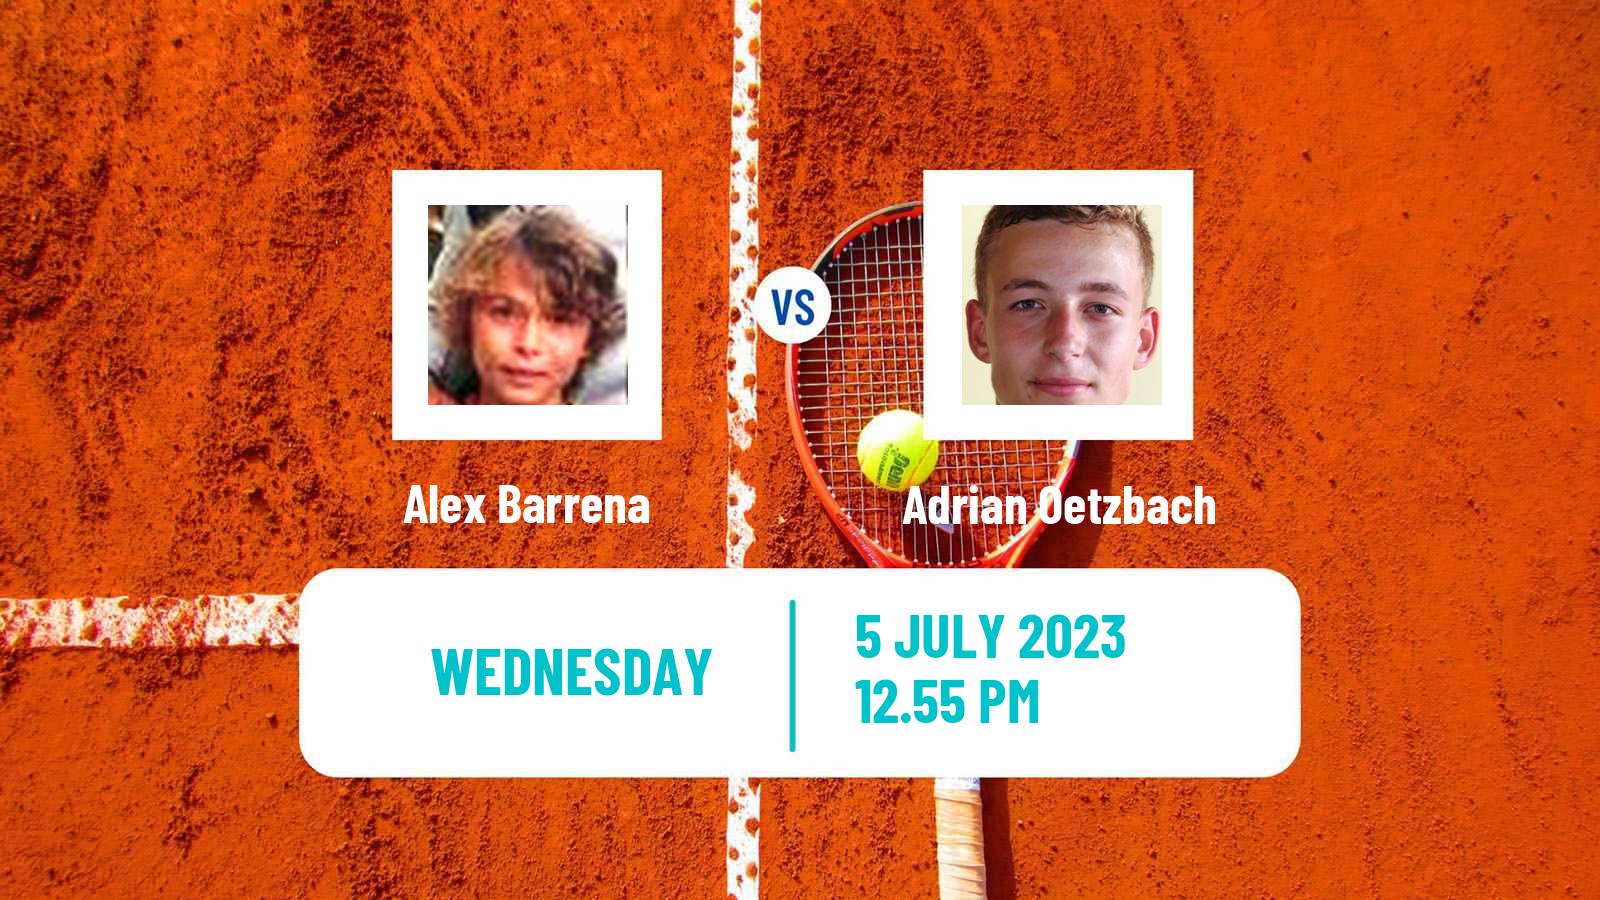 Tennis ITF M25 Marburg Men Alex Barrena - Adrian Oetzbach